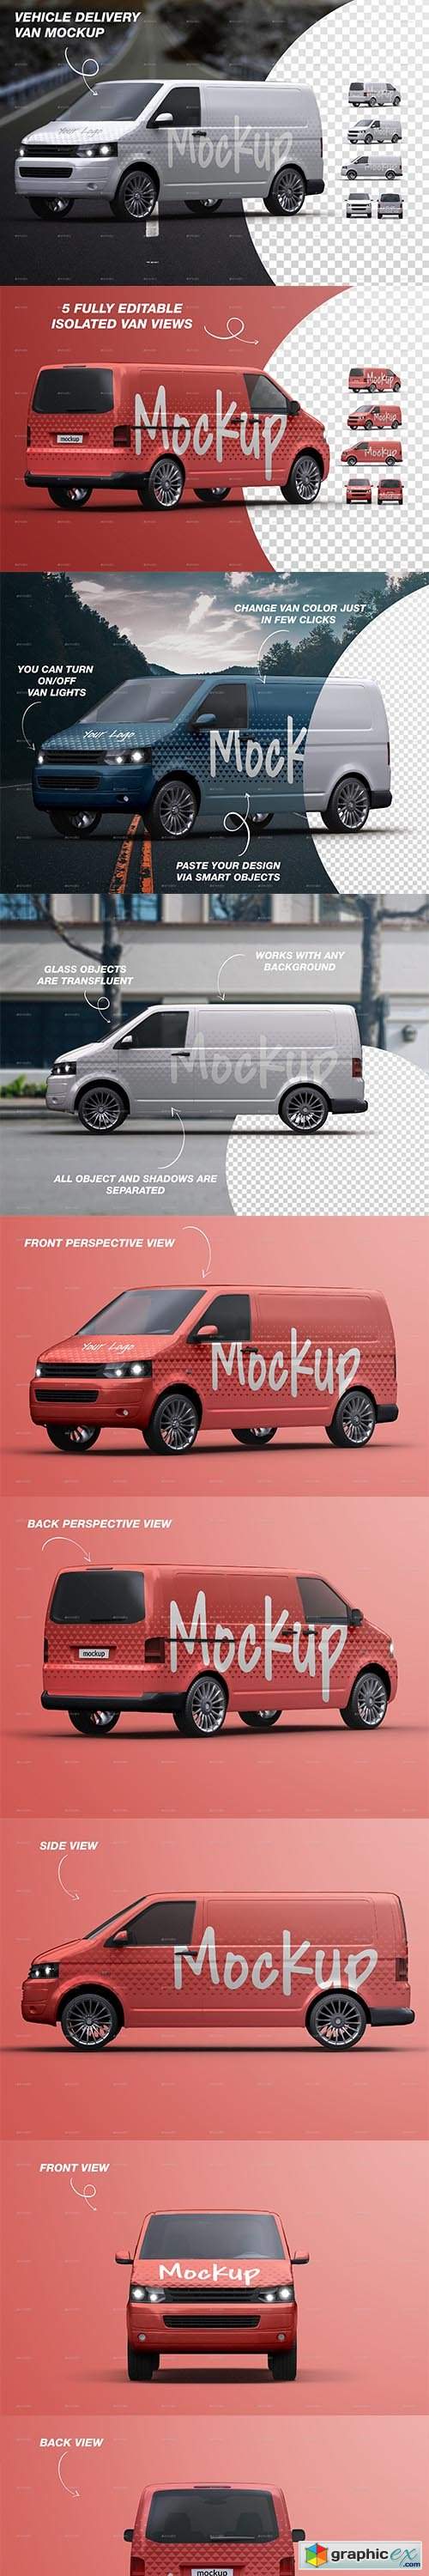 Vehicle Delivery Van Mockup 